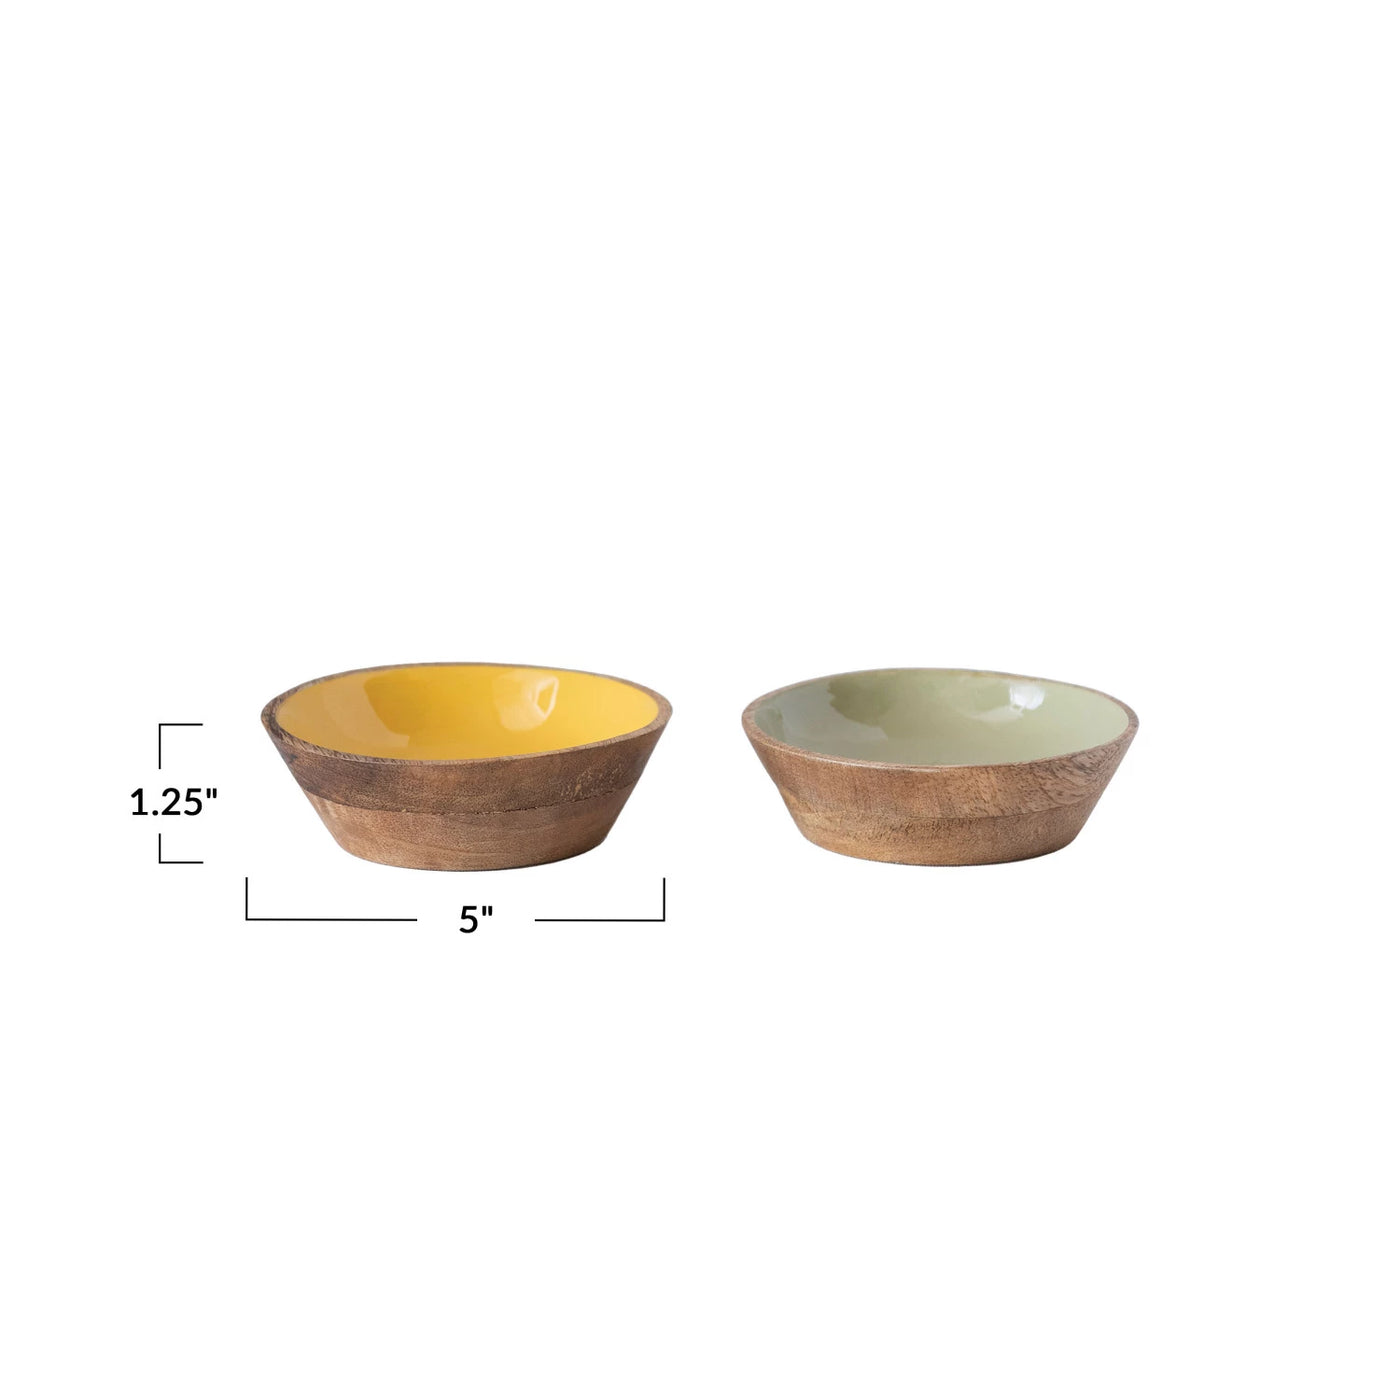 5" Enameled Mango Wood Bowl, 2 Colors